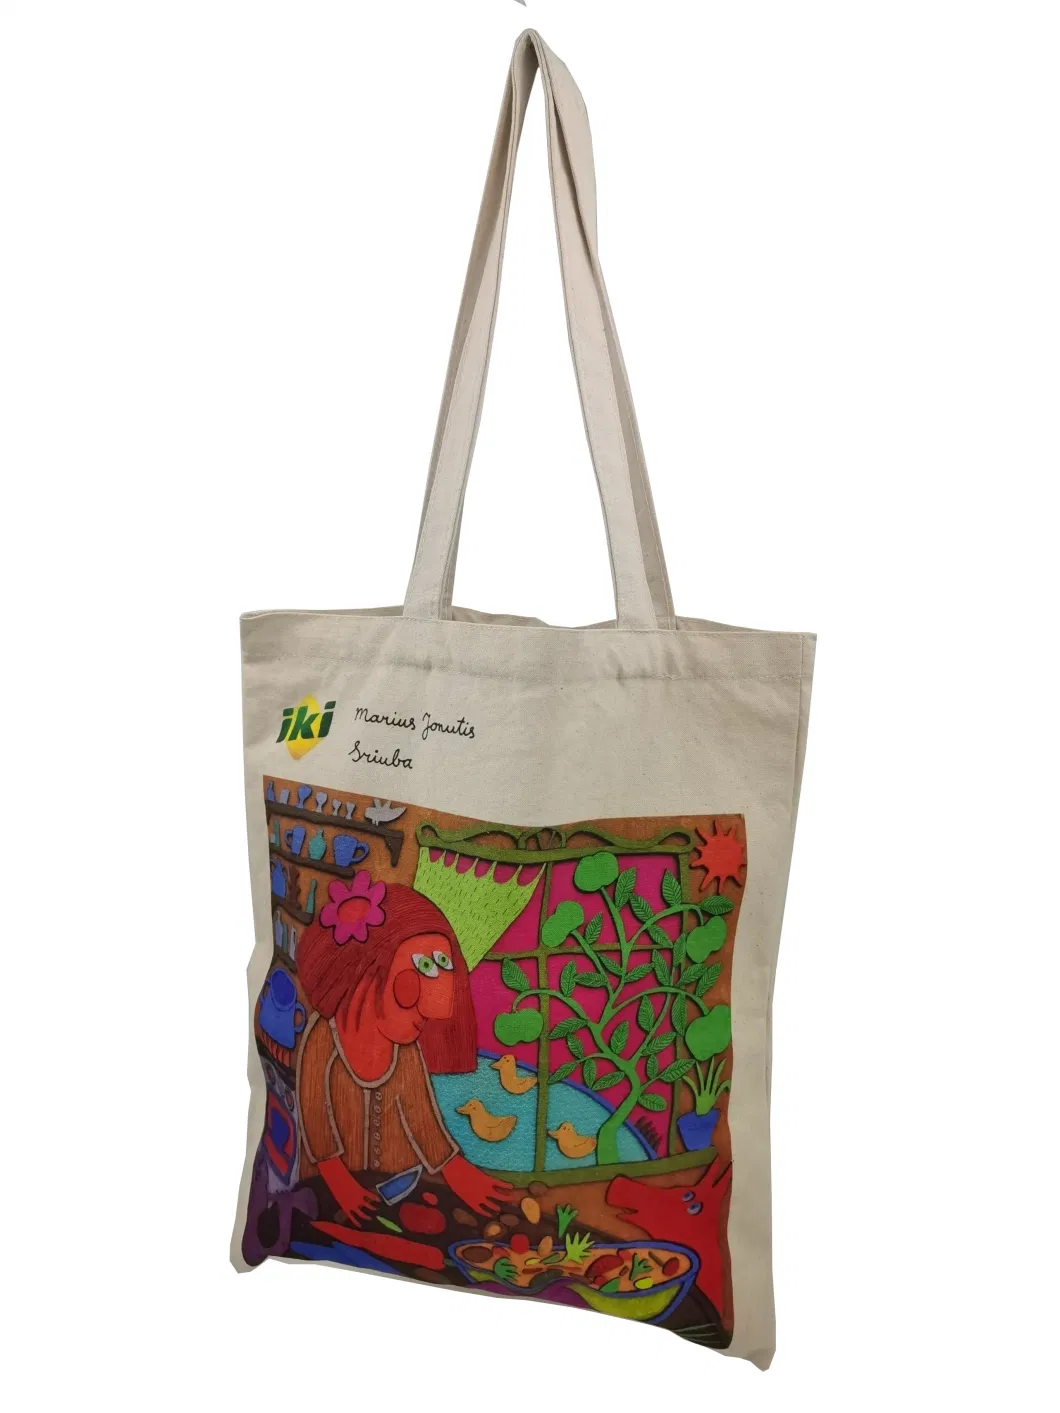 Factory Customized Digital Printed Cotton Bag, Canvas Bag, Tote Bag, School Bag, Cotton Shoulder Bag, Canvas Shopping Bag